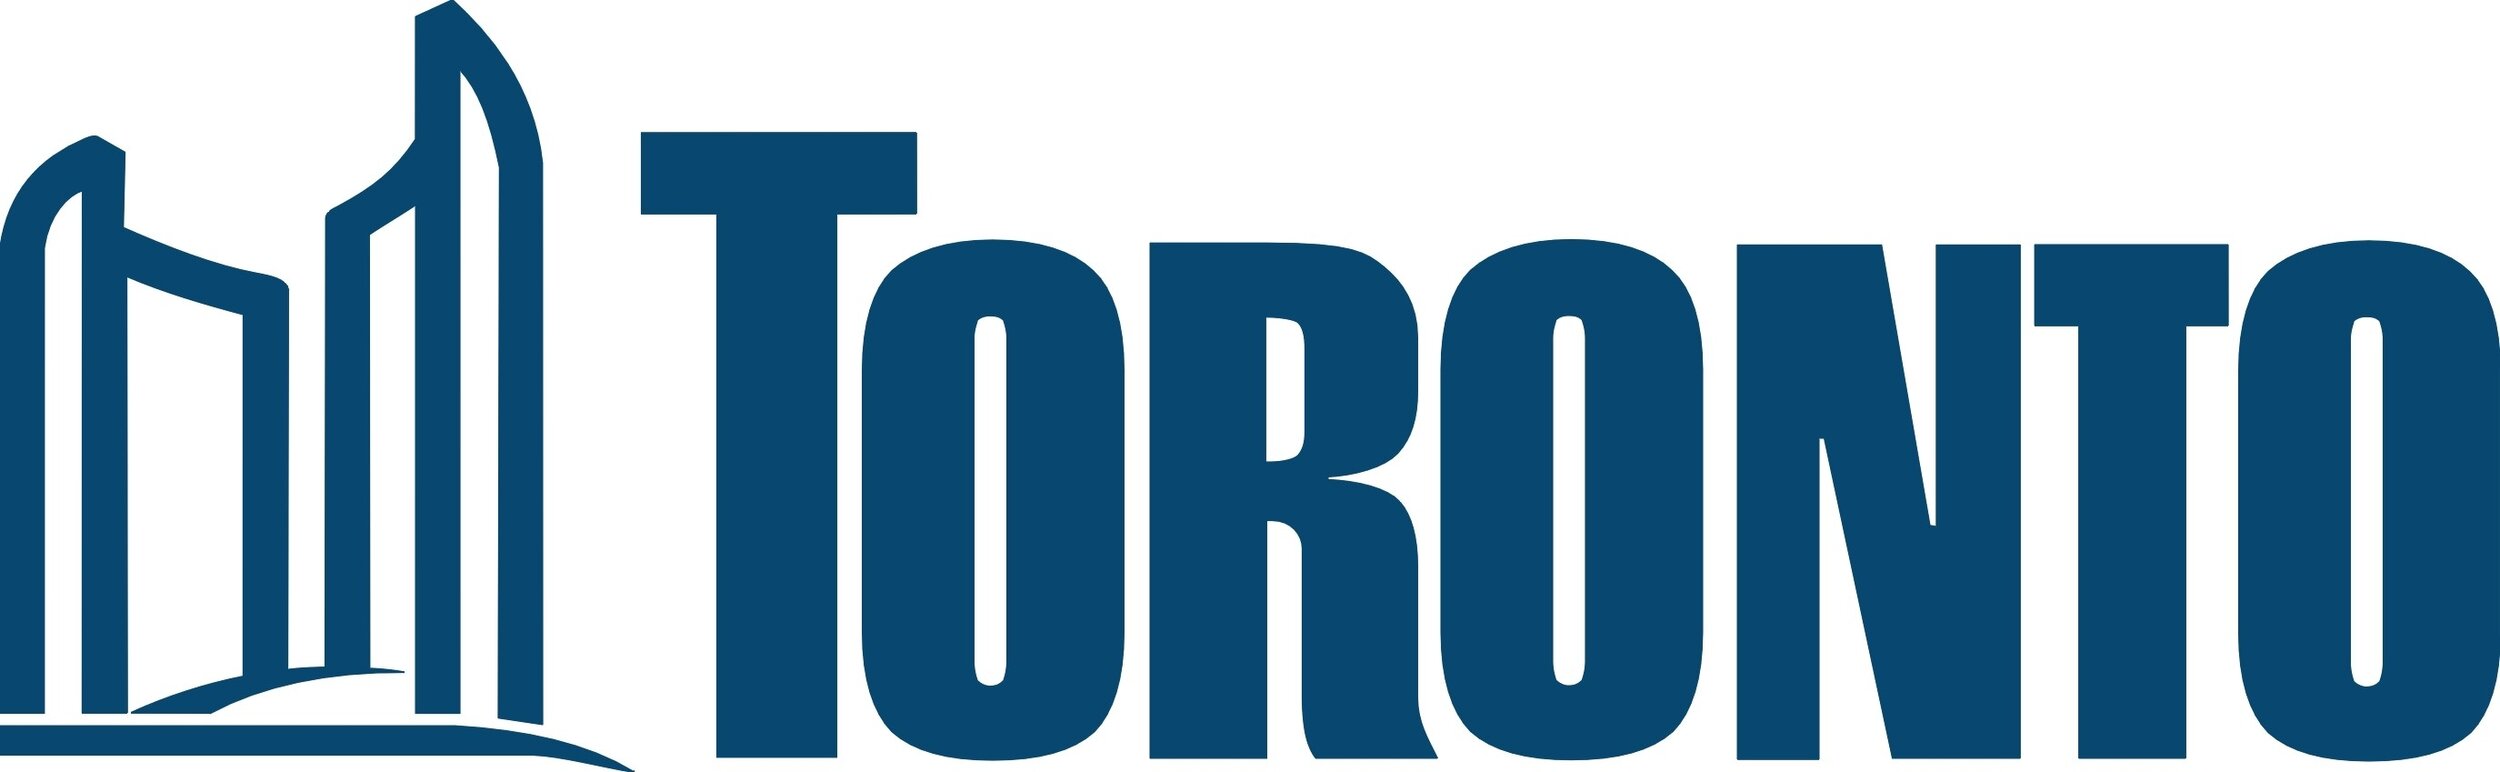 City-of-Toronto-logo-low-res.jpeg